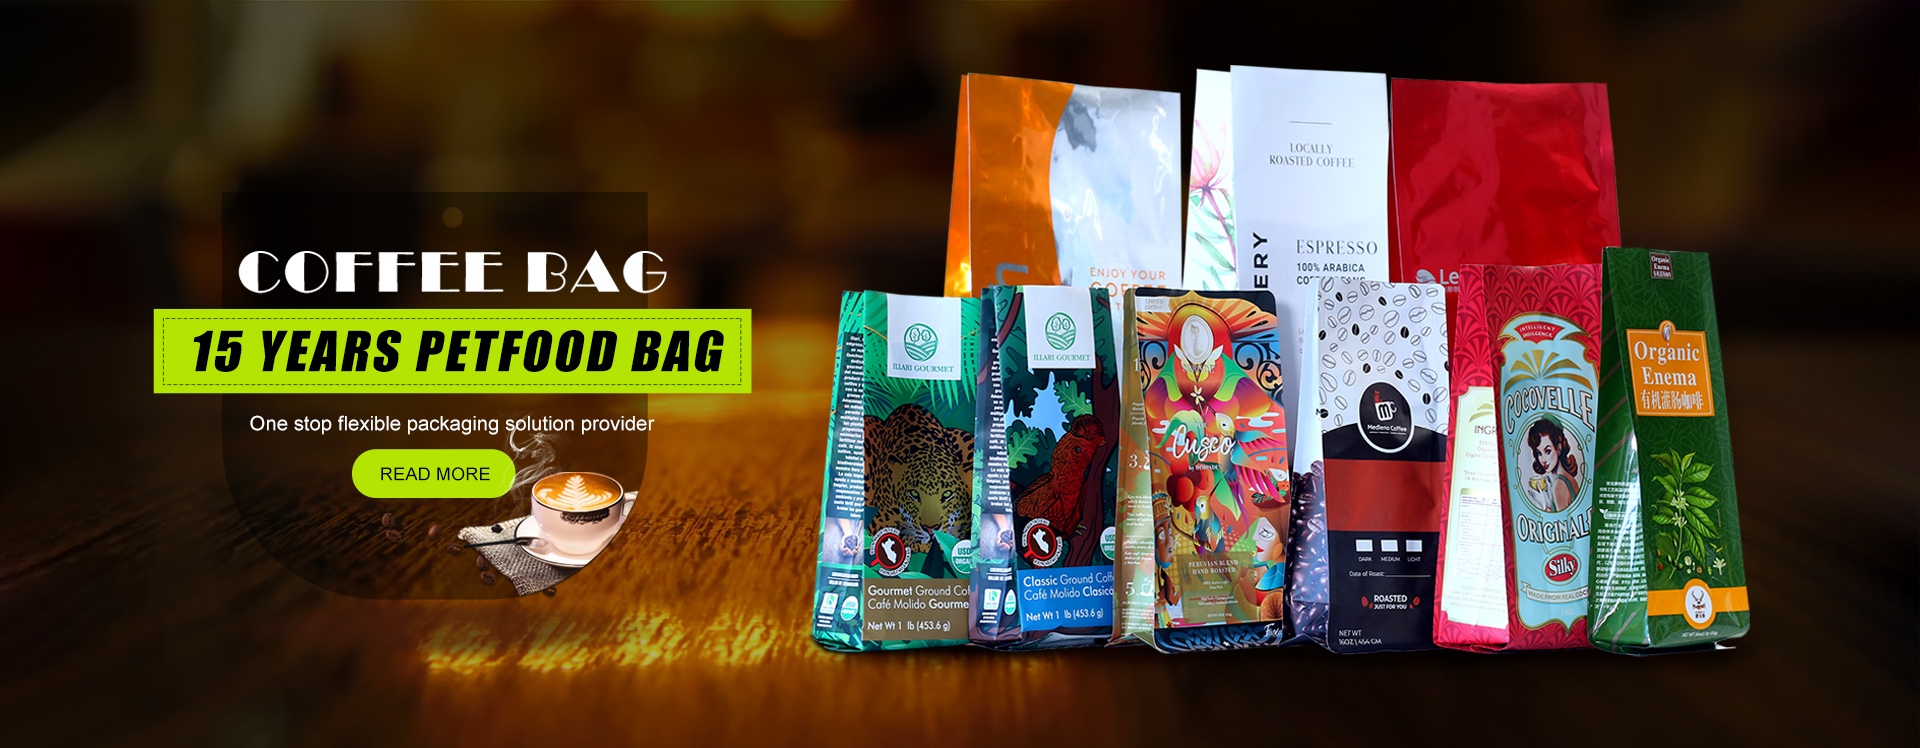 Minfly Packaging Coffee Bag Баннер